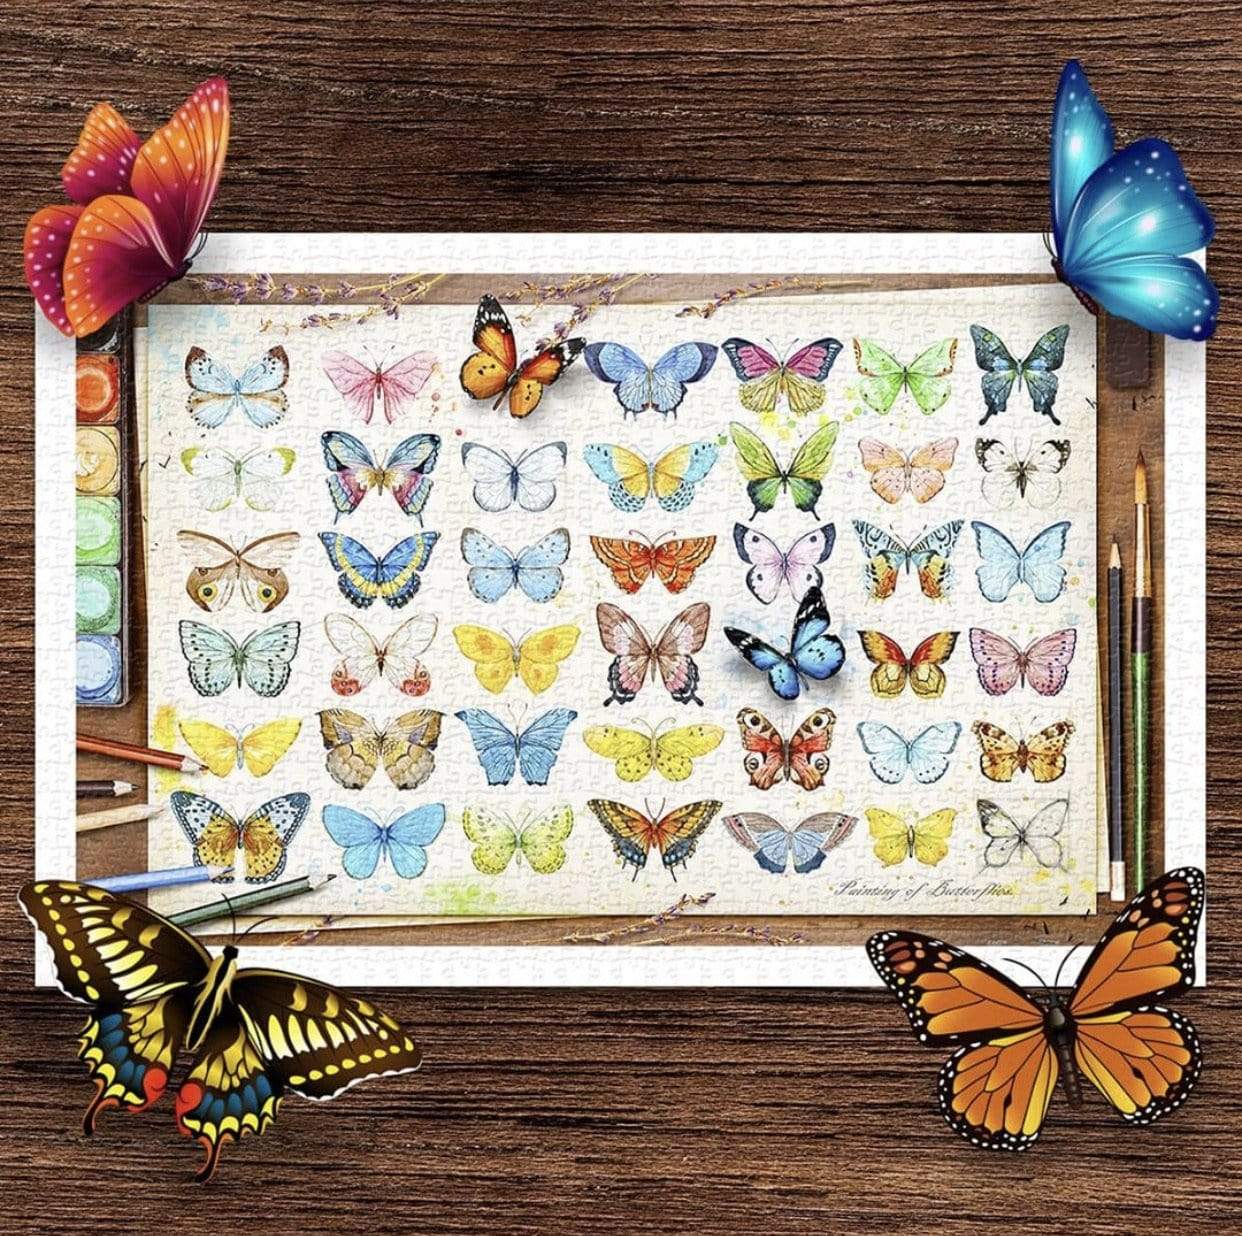 Beautiful Butterflies - 1000 Piece Jigsaw Puzzle